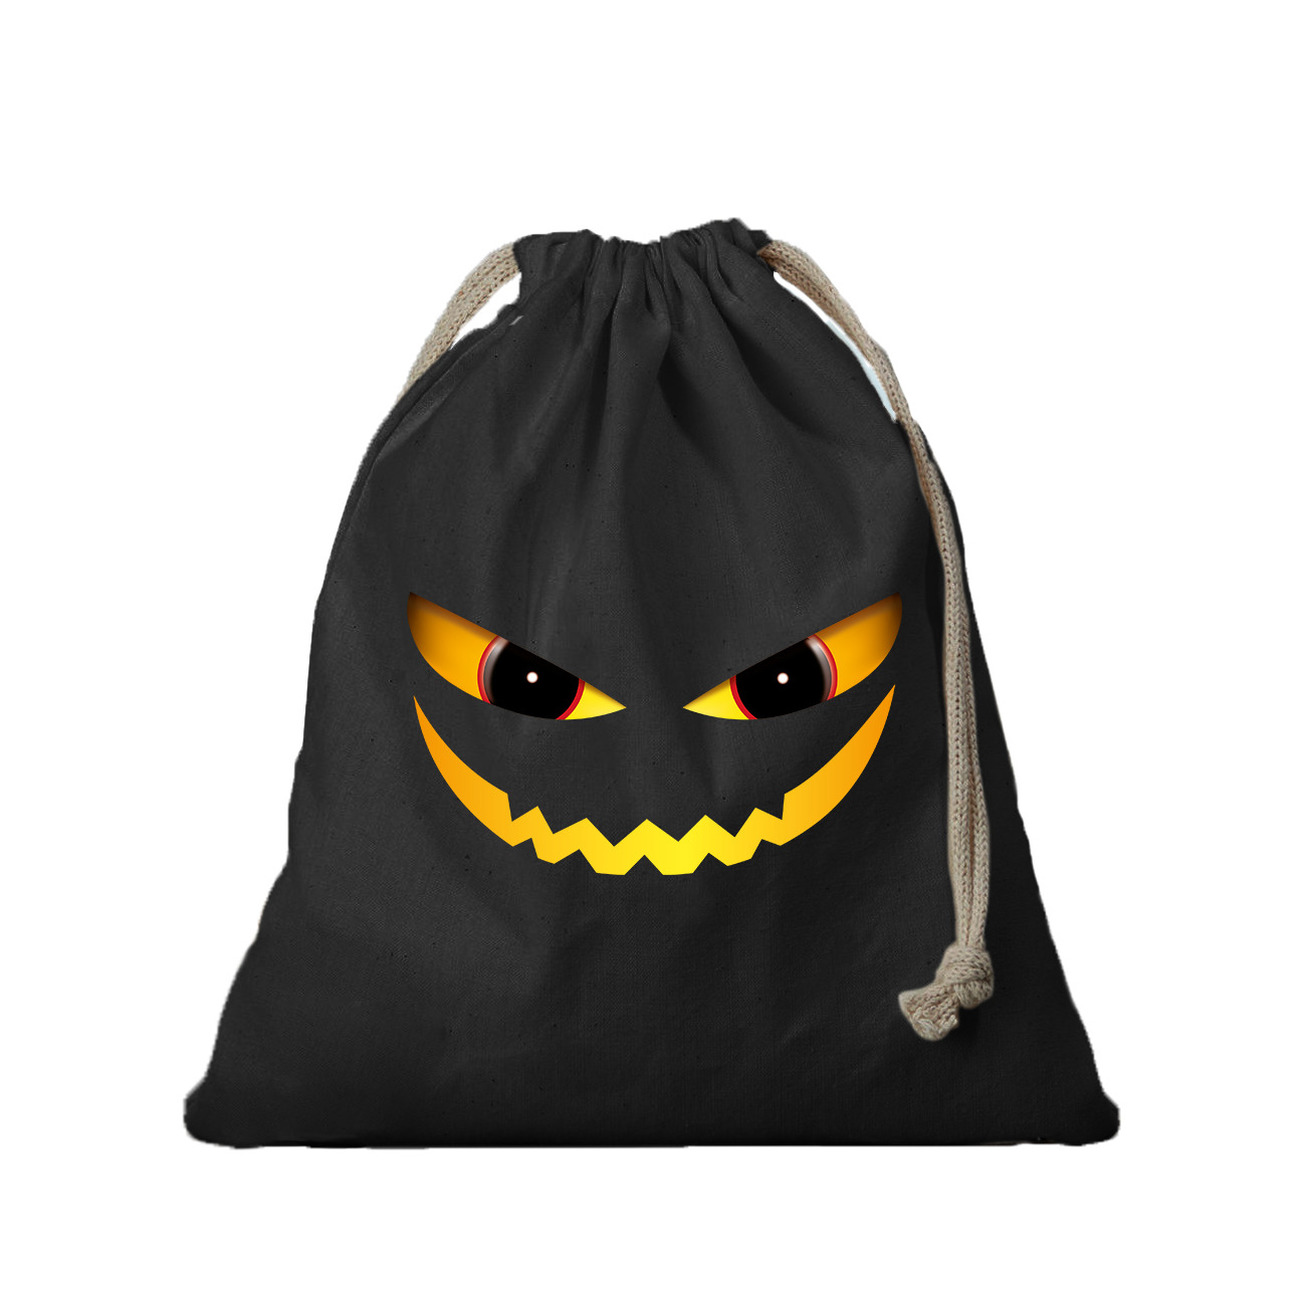 Halloween - 1x Duivel gezicht halloween canvas snoep tasje/ snoepzakje zwart met koord 25 x 30 cm